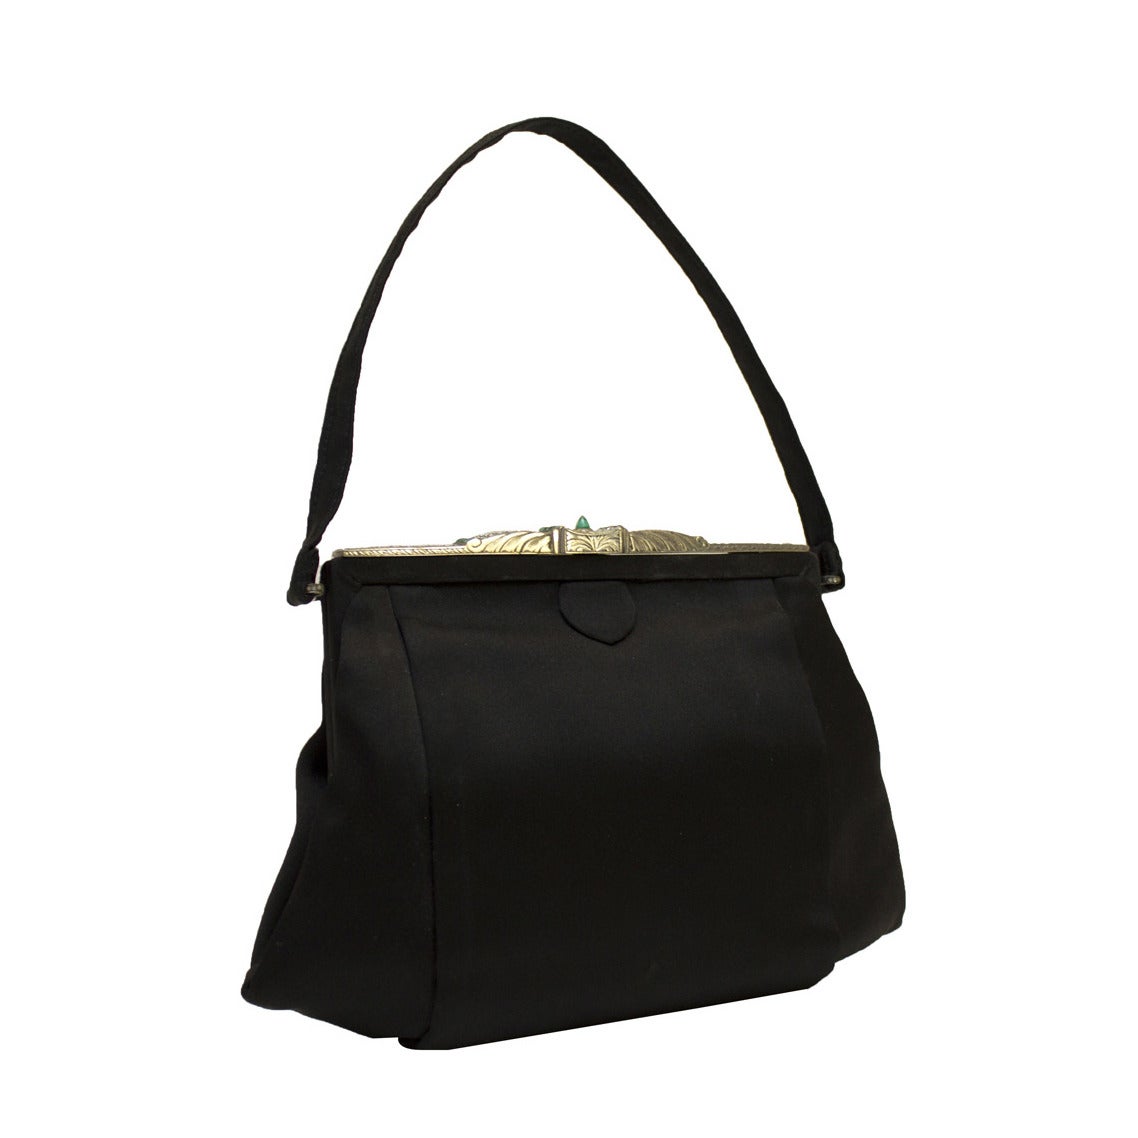 Gucci bag sale black friday 0244, jessica simpson signature luggage tote fake, roxy duffle bag ebay